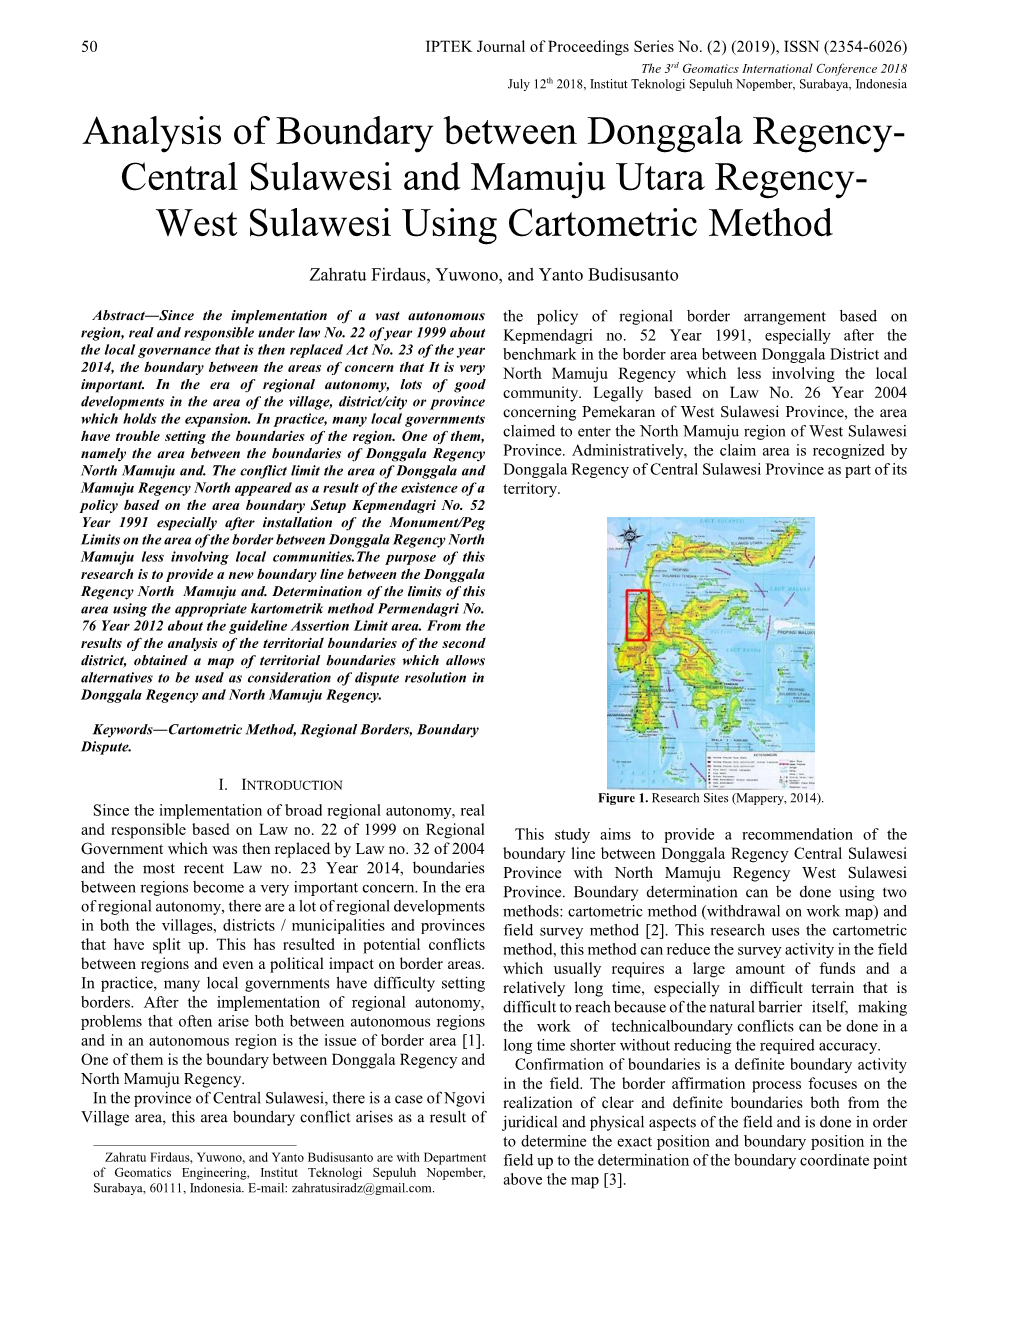 Analysis of Boundary Between Donggala Regency- Central Sulawesi and Mamuju Utara Regency- West Sulawesi Using Cartometric Method